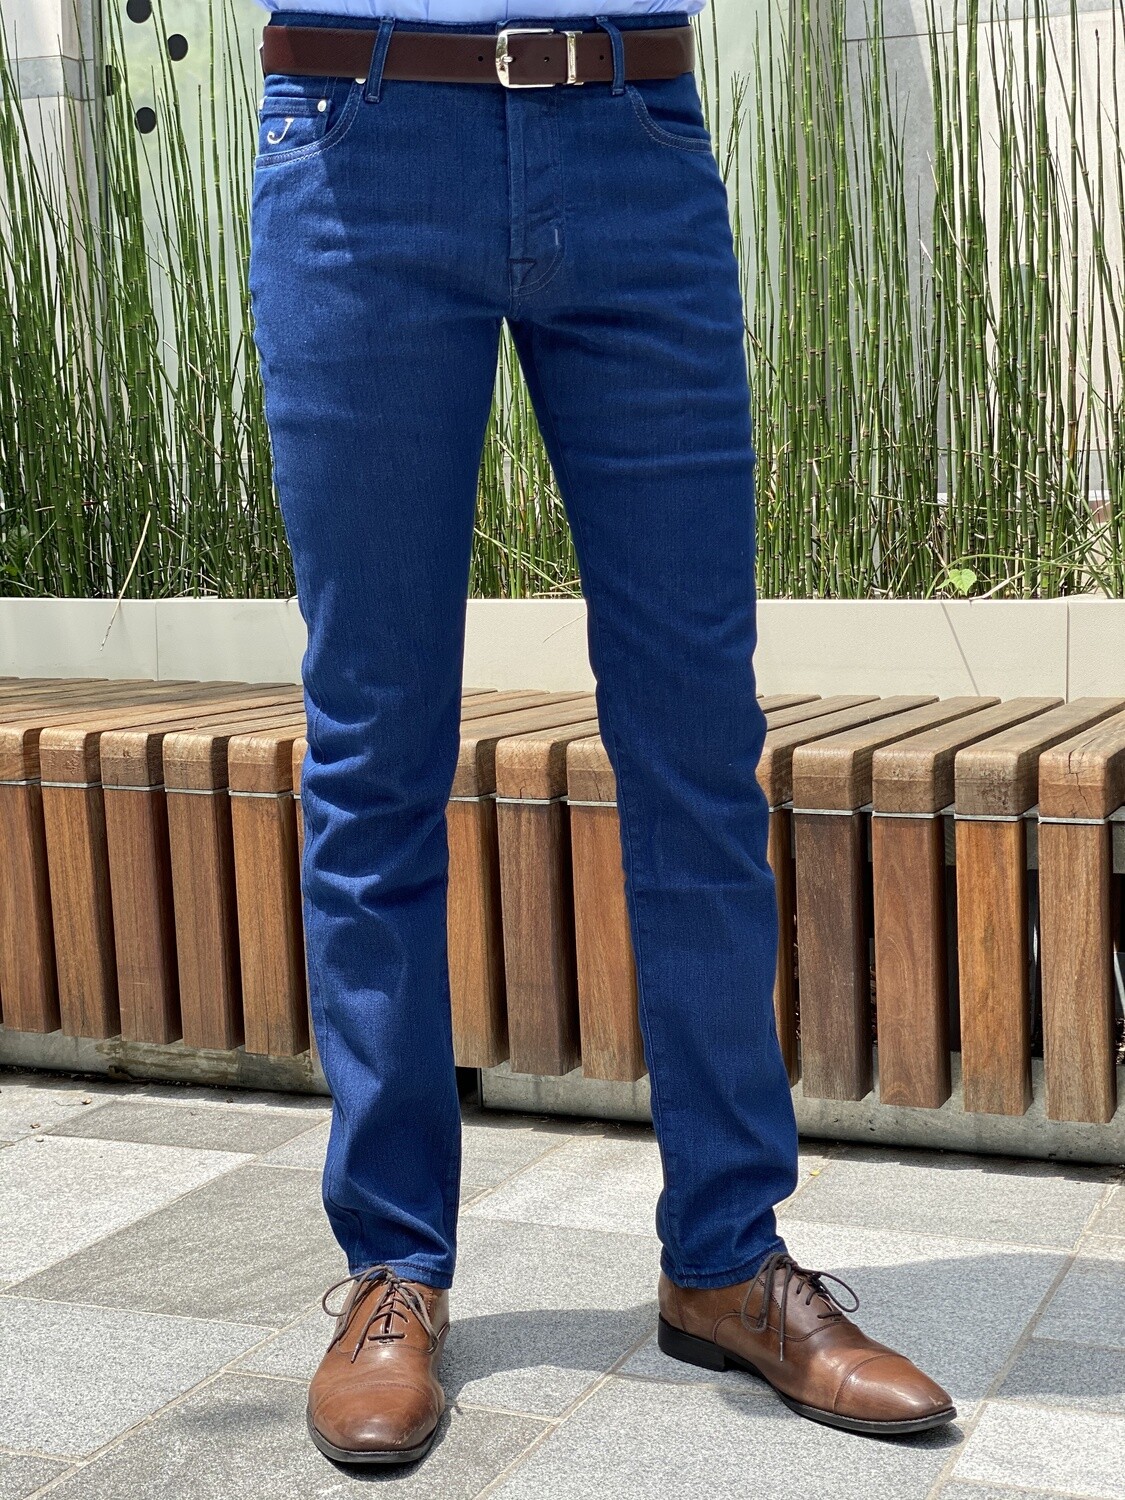 Onbemand Kalmte Wegrijden Jacob Cohen Comfort Fit Luxury Stretch Denim Jeans - Blue